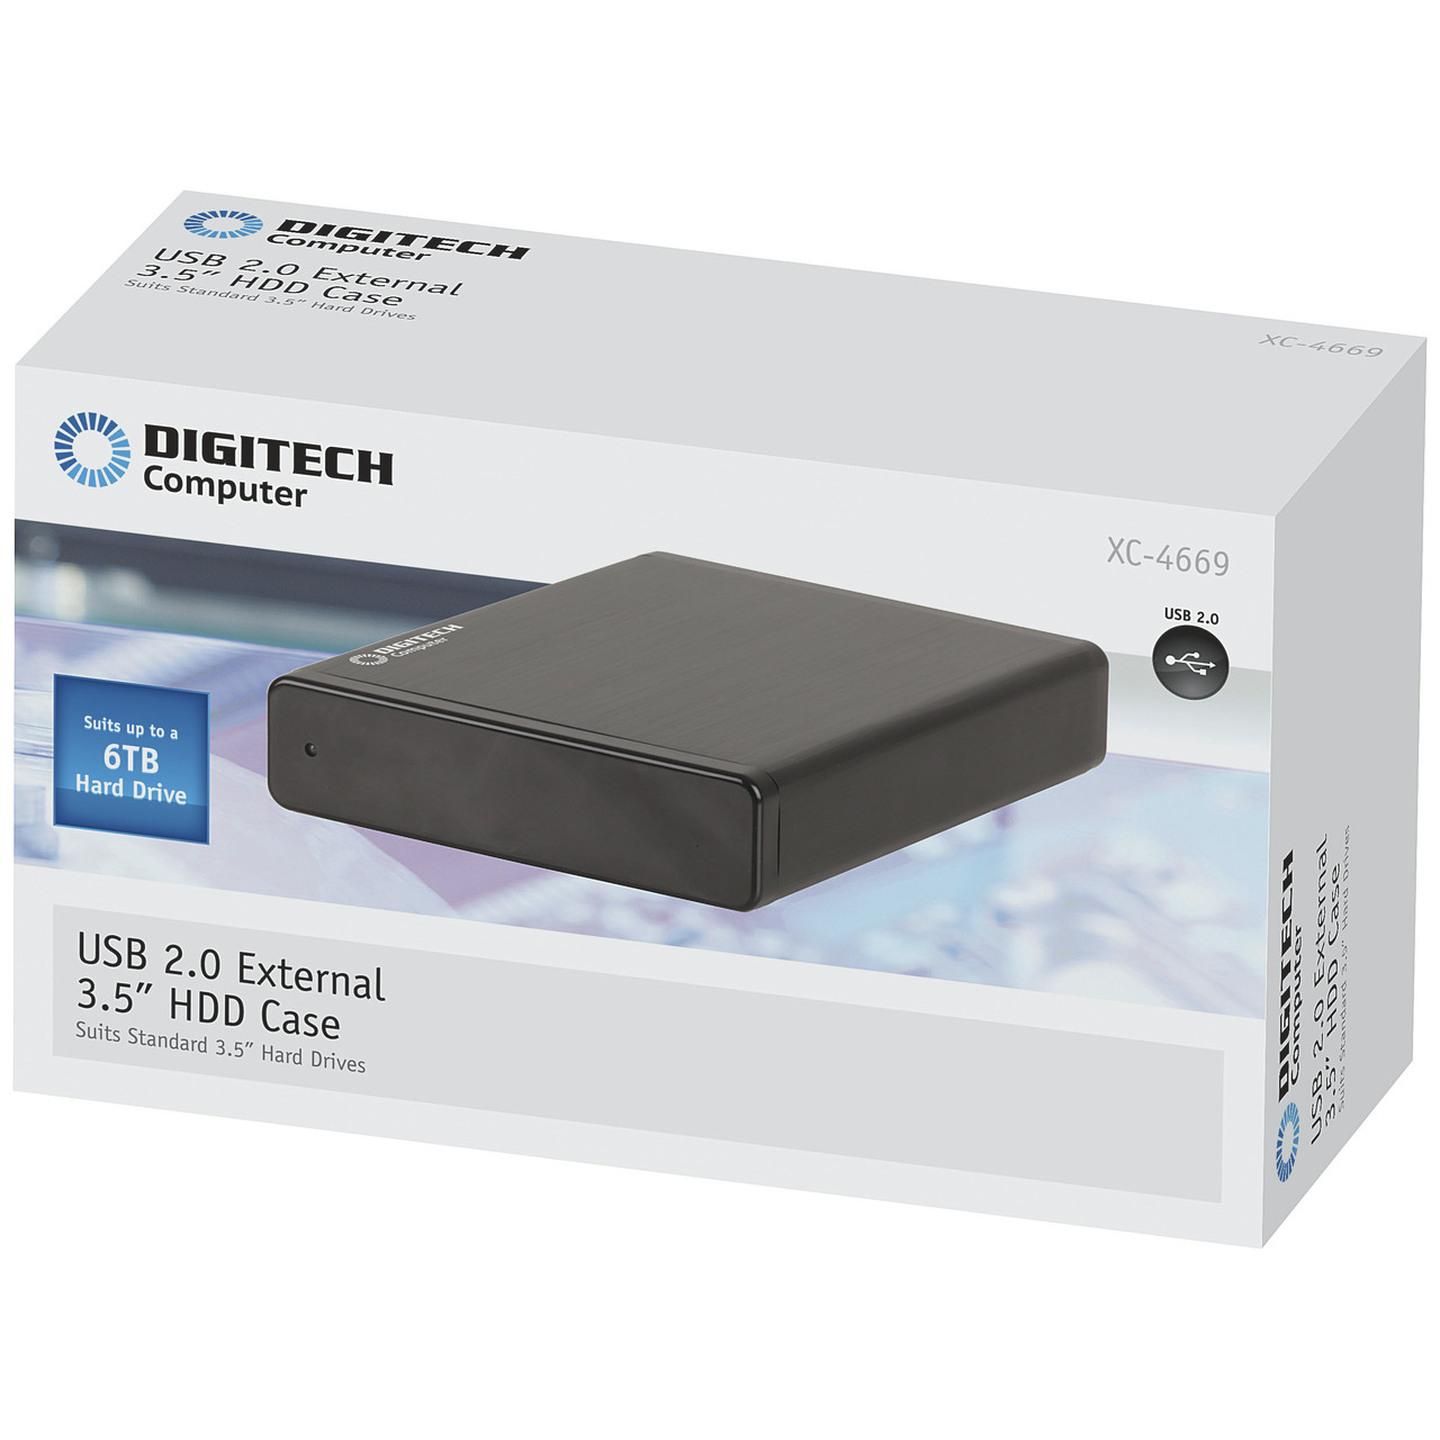 USB 2.0 External 3.5 HDD Case